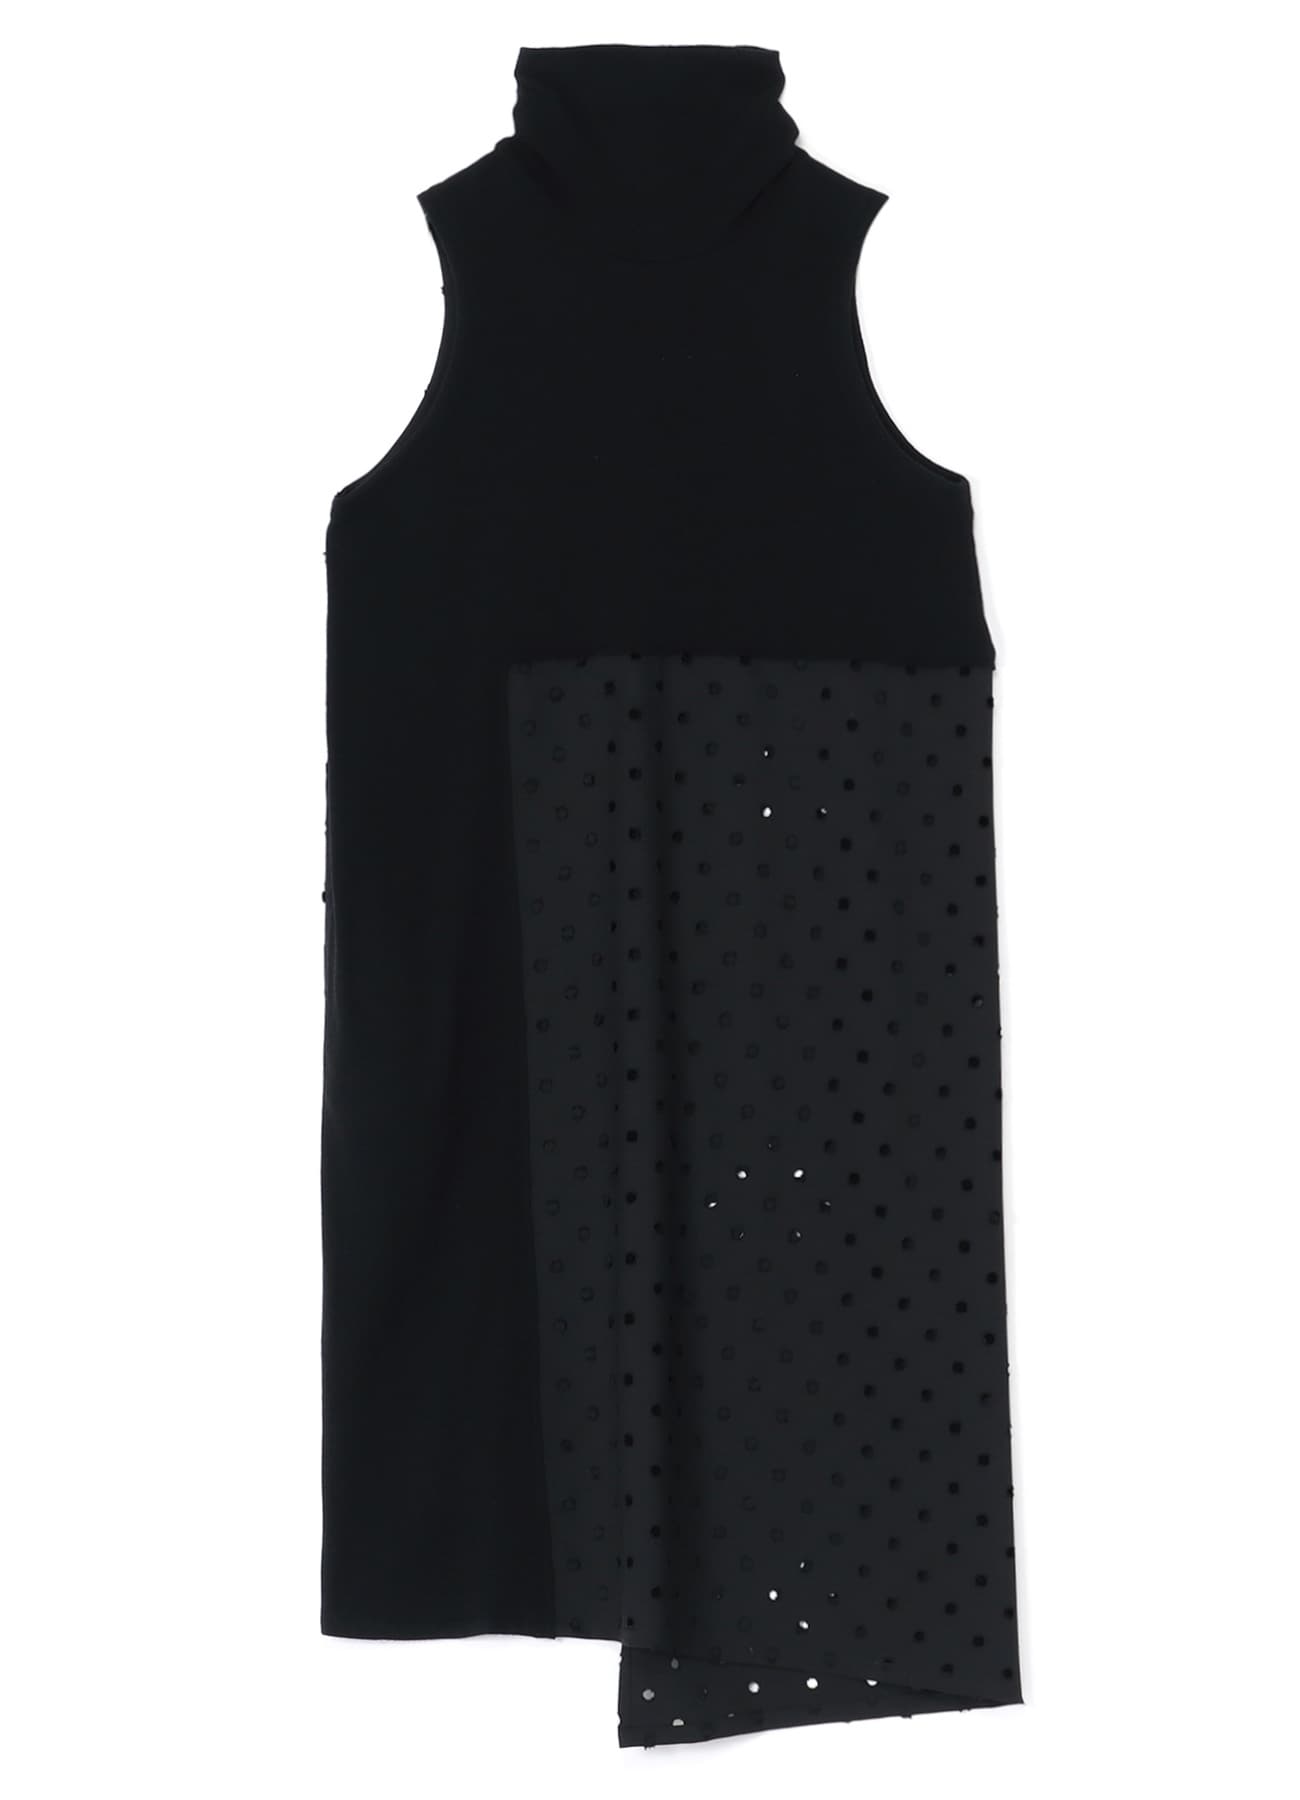 SLEEVELESS KNITTED TURTLENECK DRESS(XS Black): Vintage 1.1｜THE 